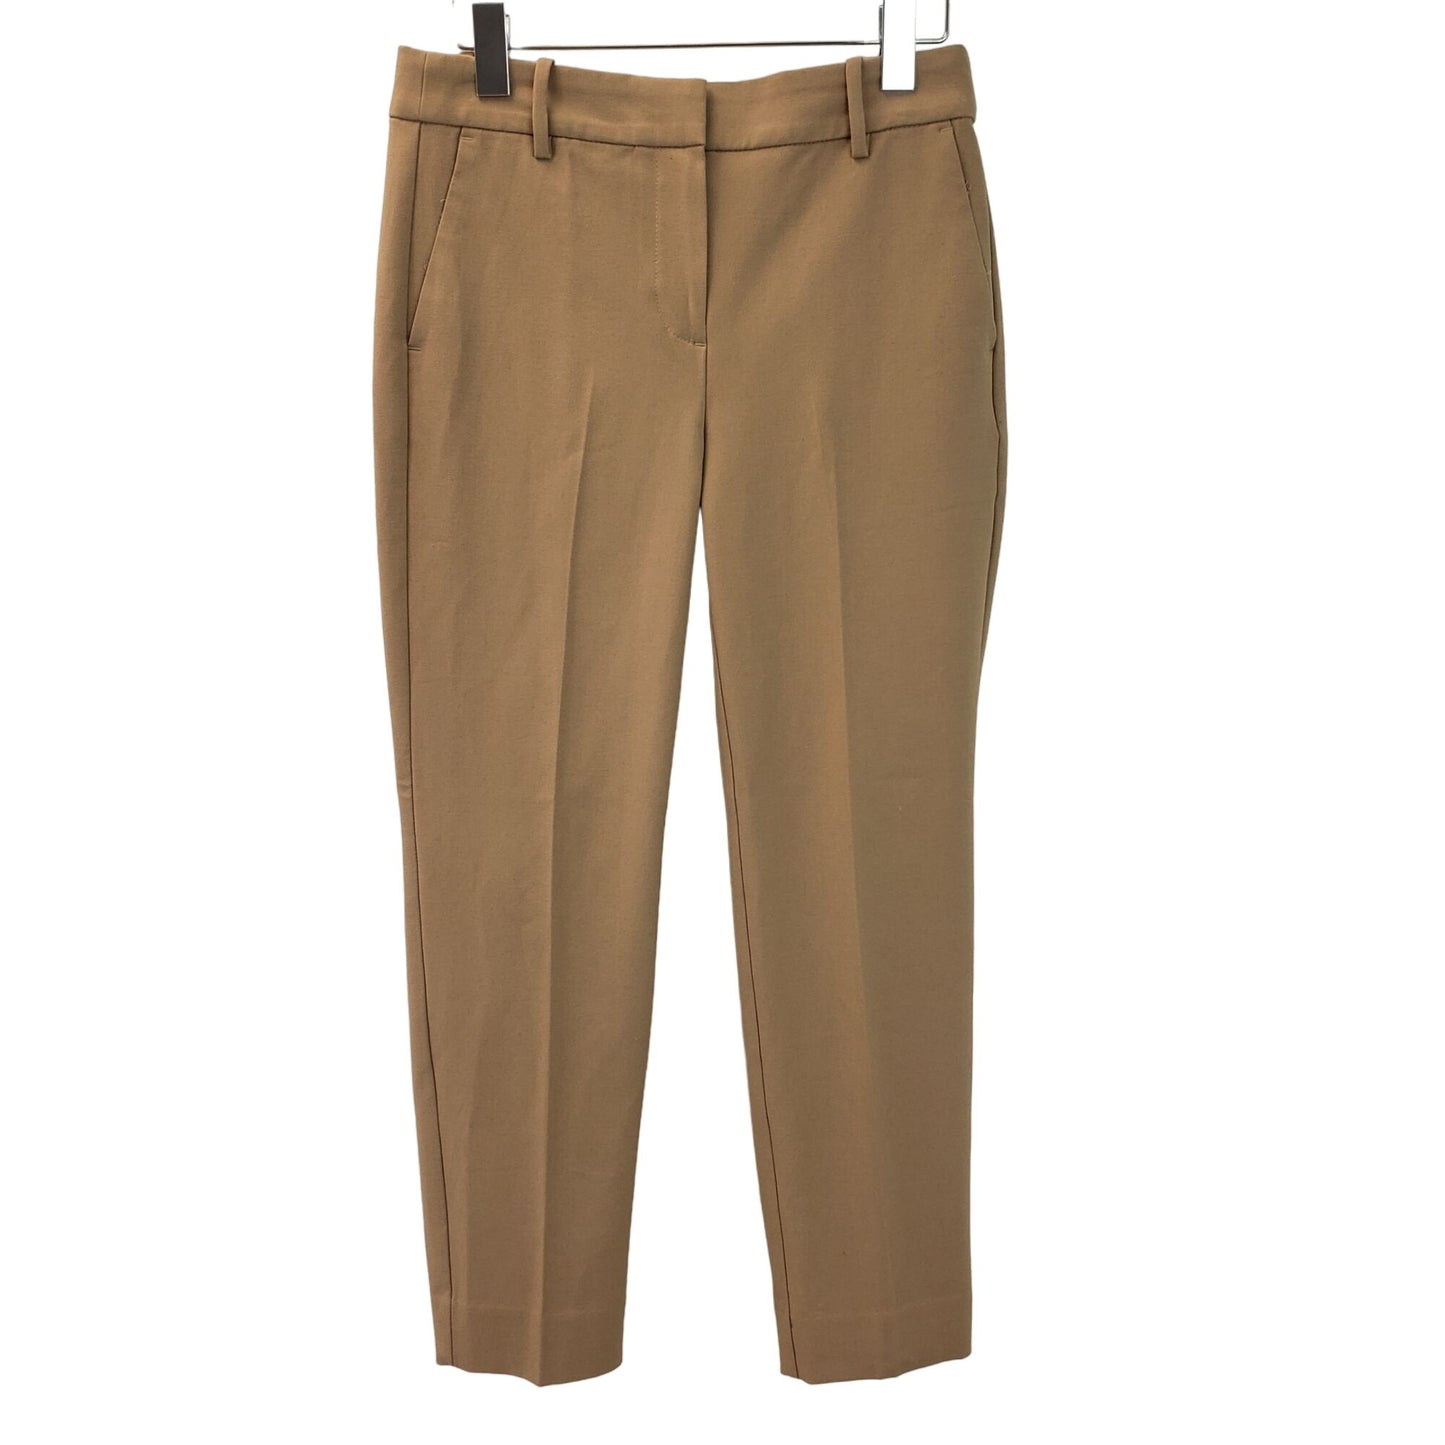 NWT J. Crew Factory Ruby Crop Trouser Pants Size 4 Petite